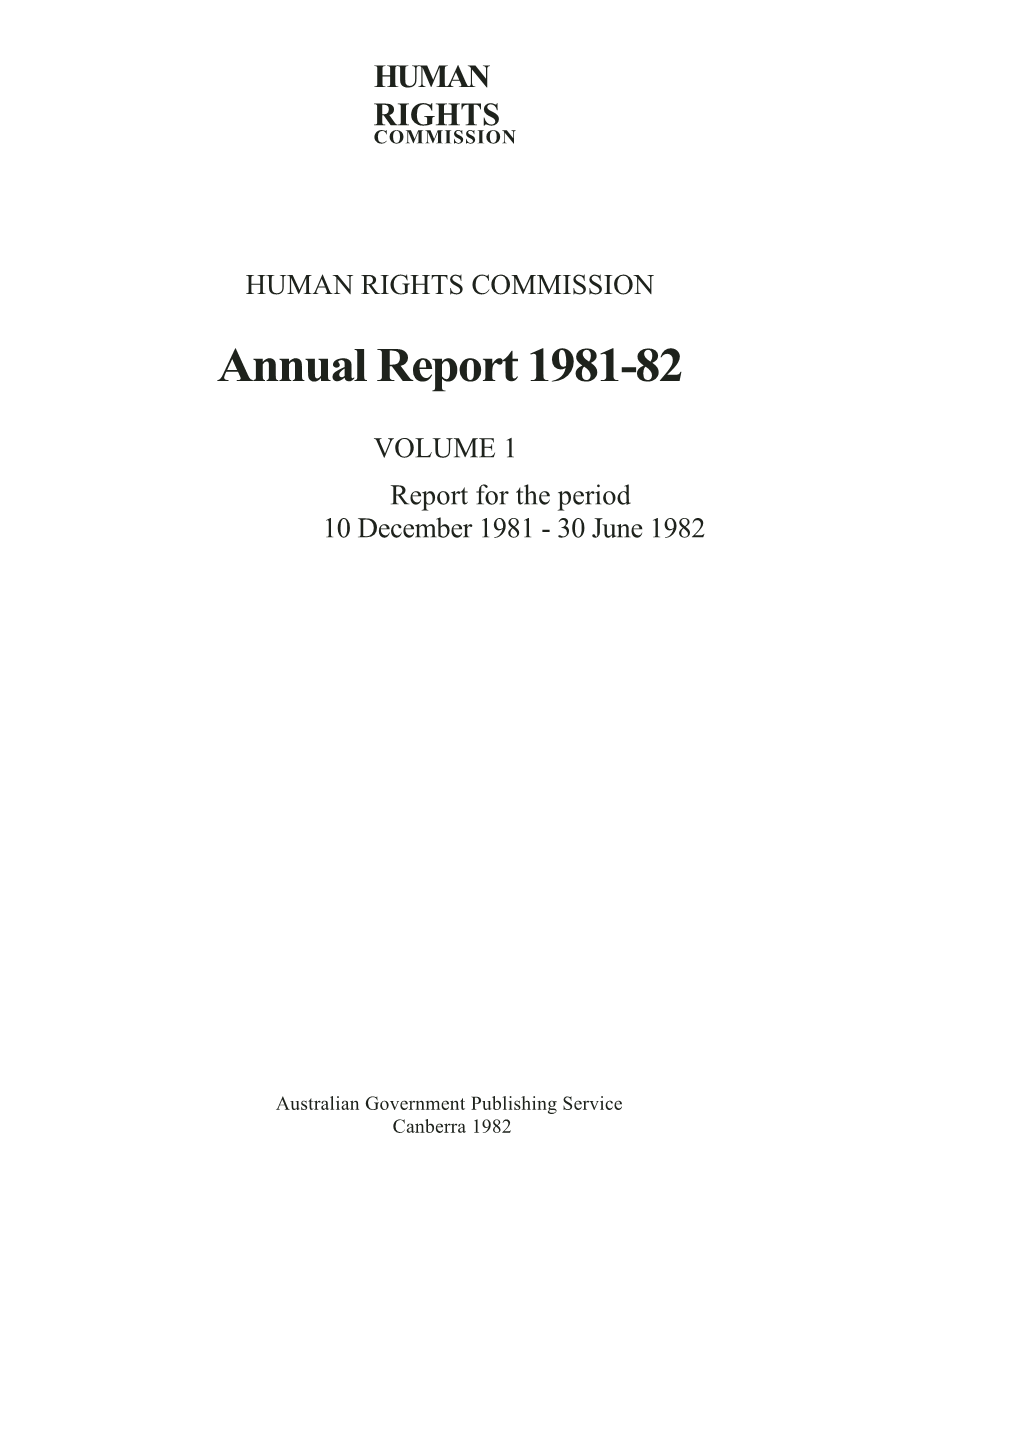 Annual Report 1981-82